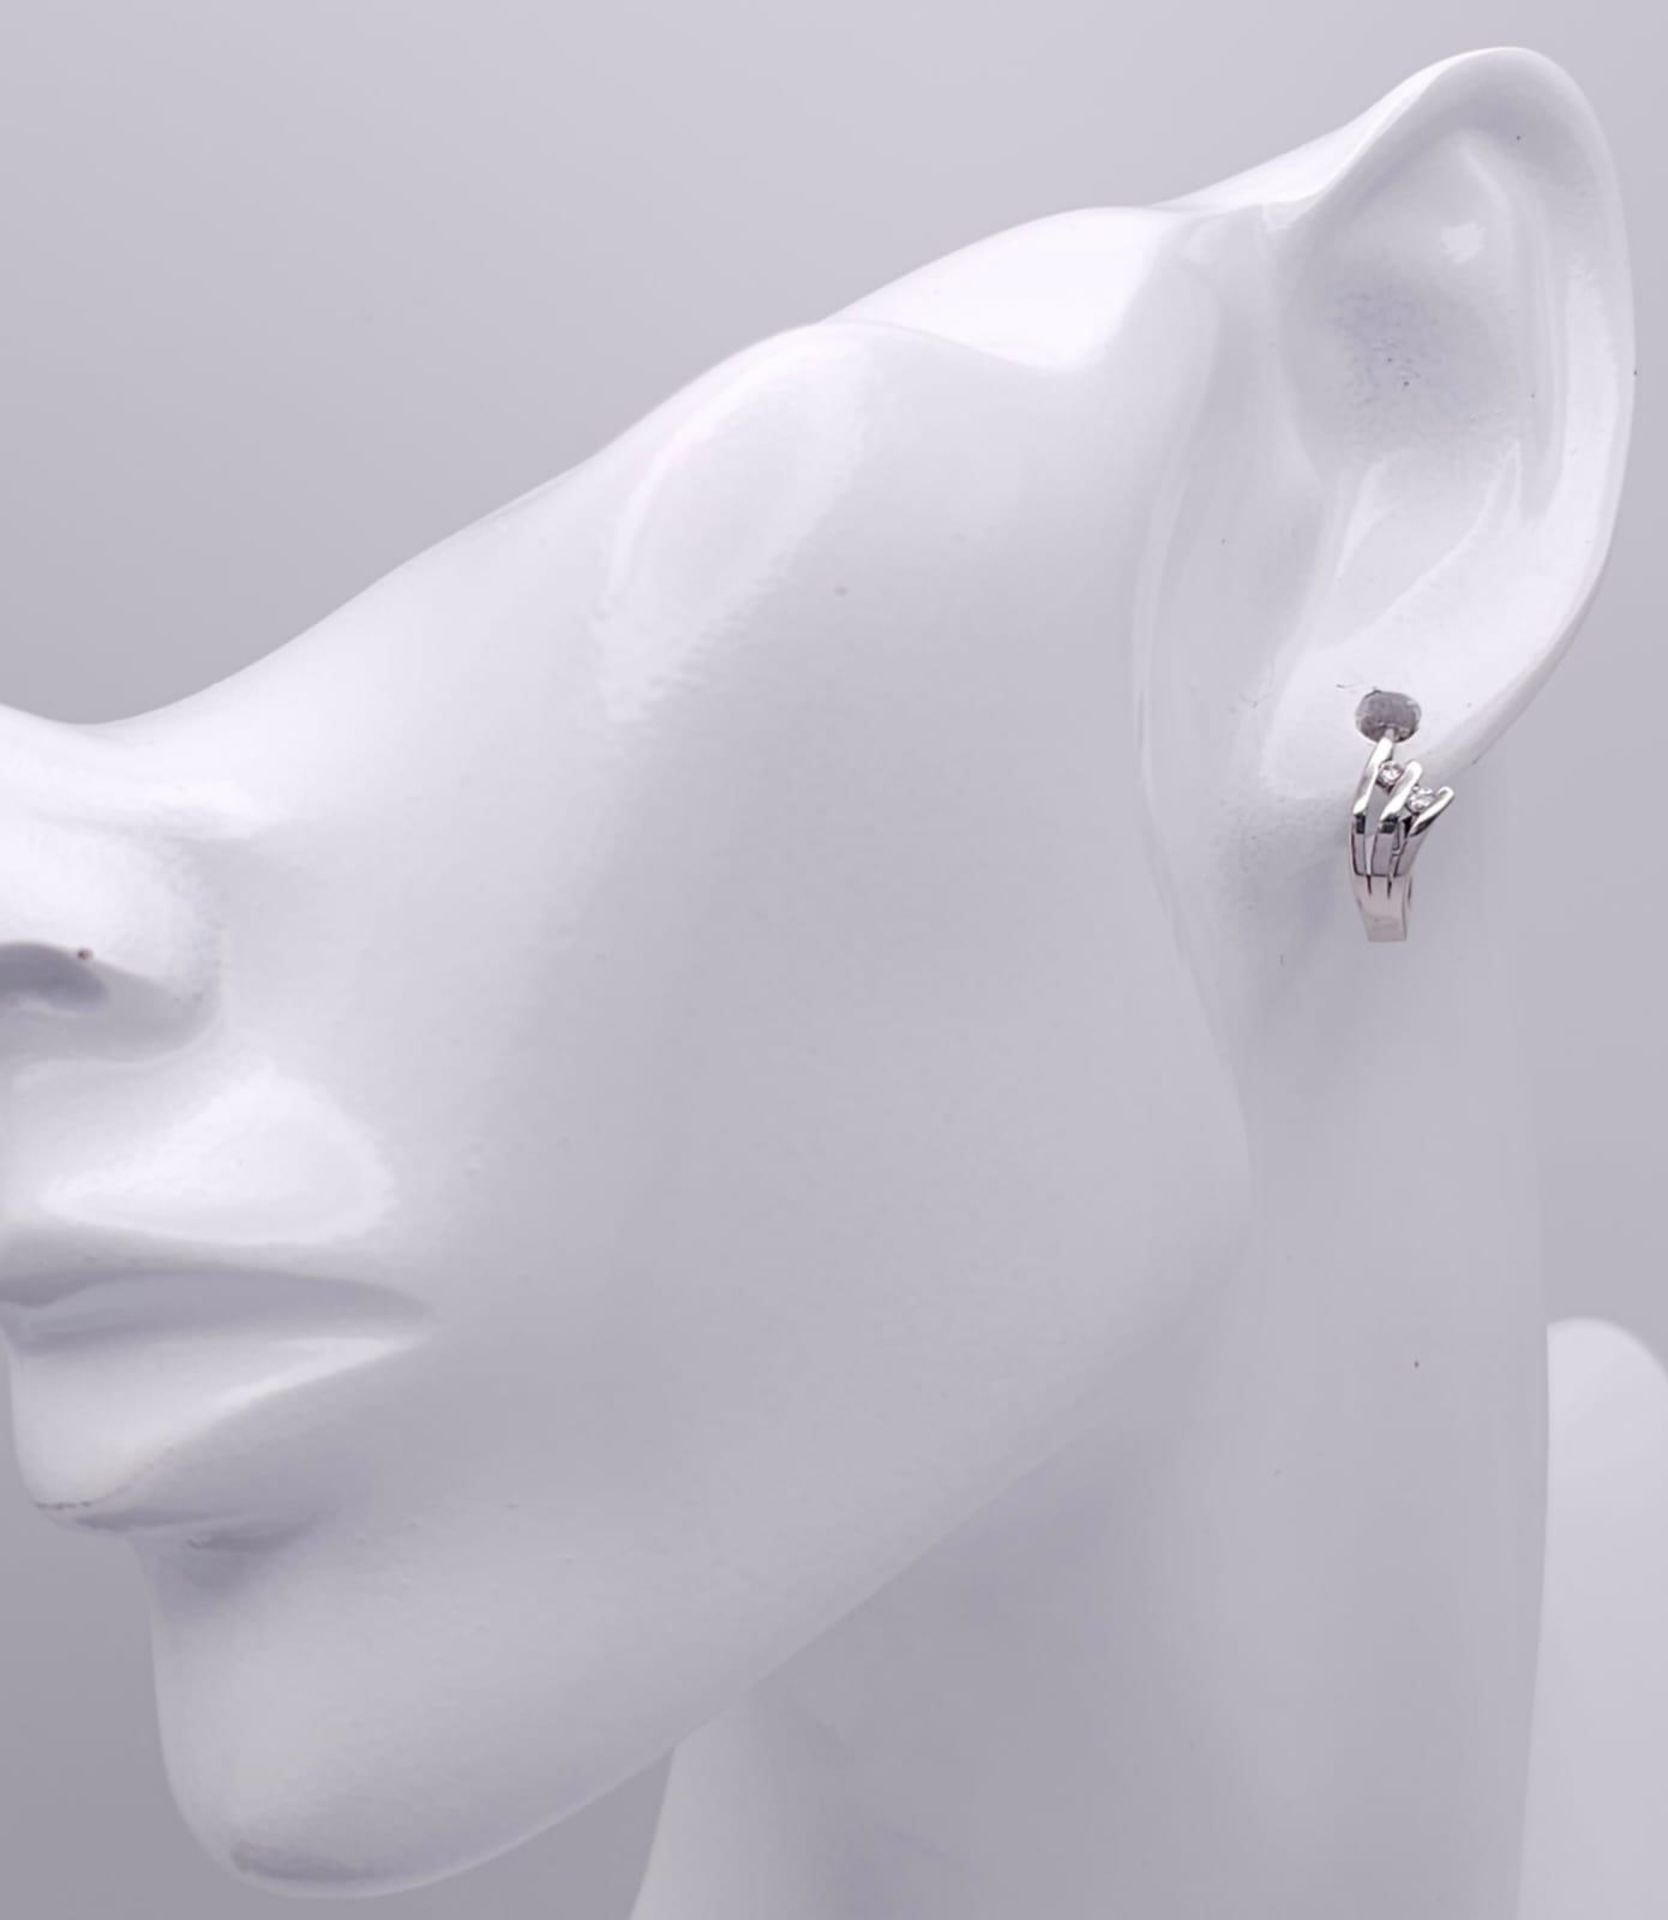 Pair of 18K White Gold CZ Mini Hoops earrings, 3.1g total weight - Bild 5 aus 6